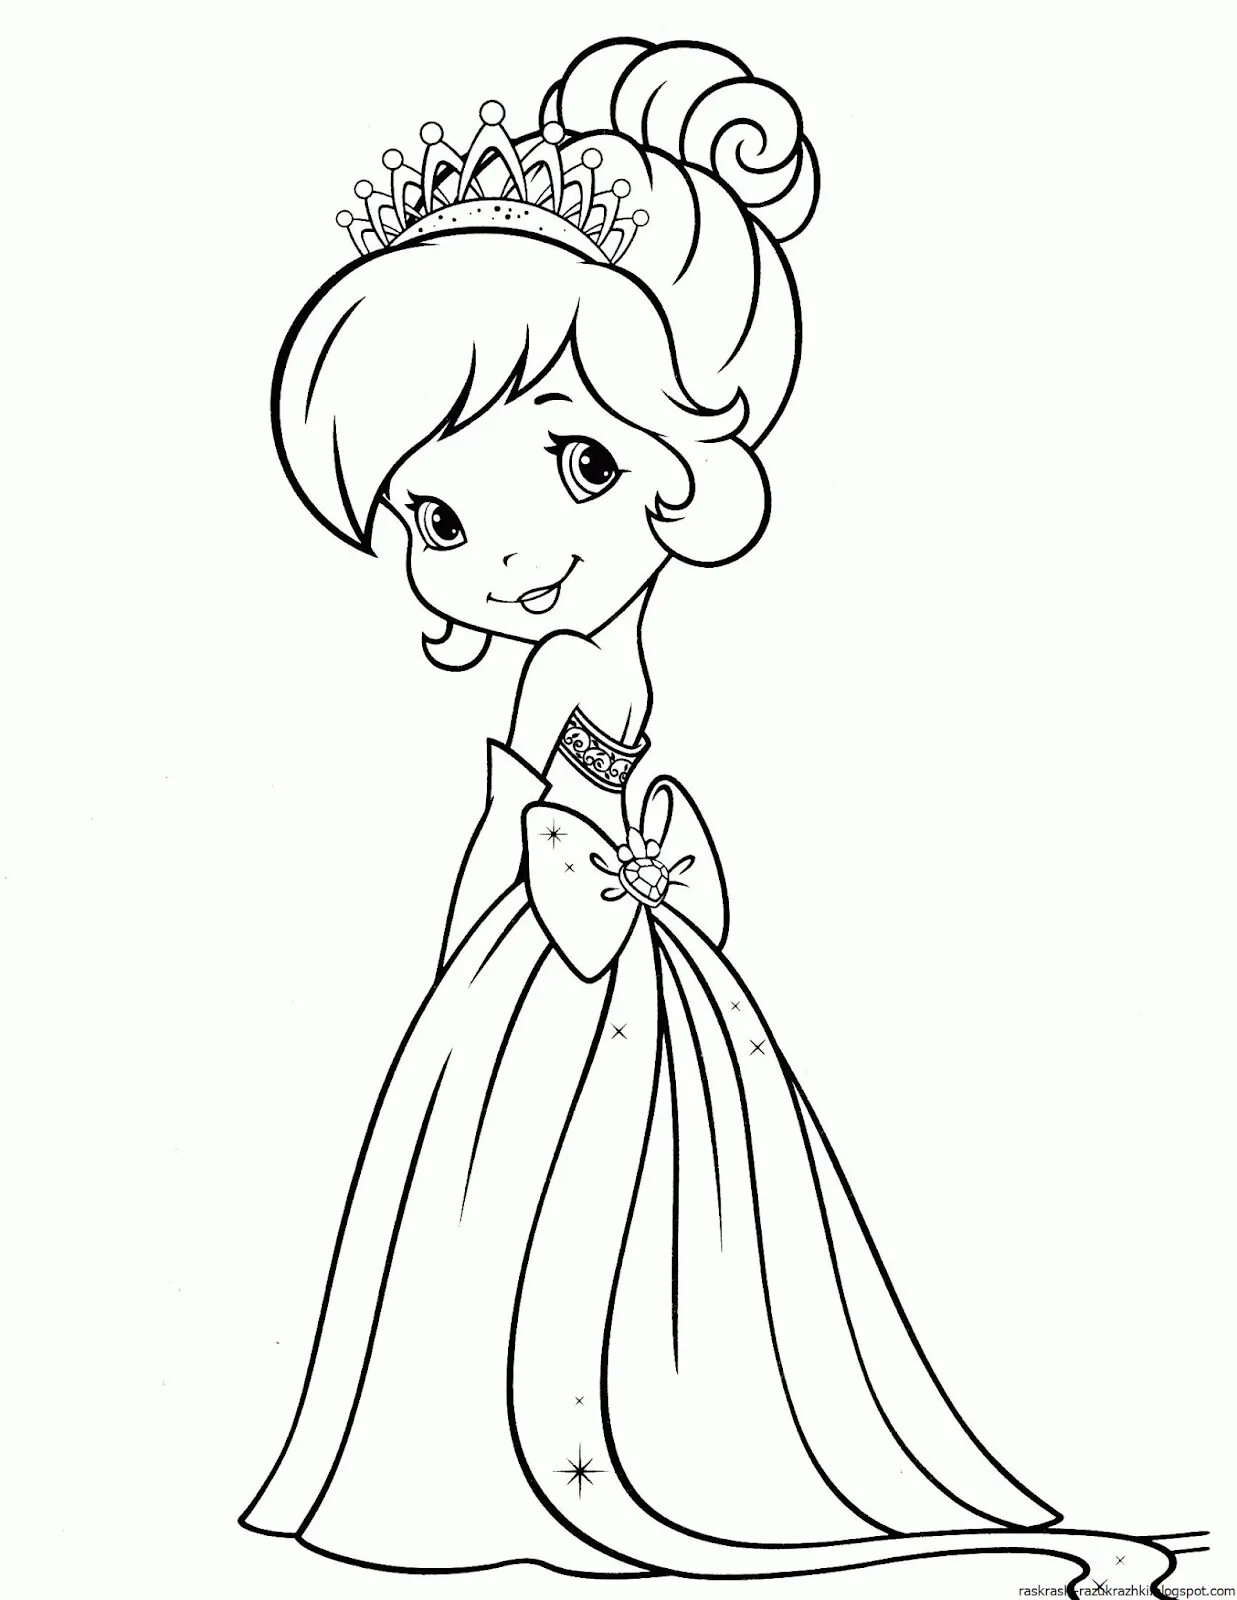 Blooming princess coloring page